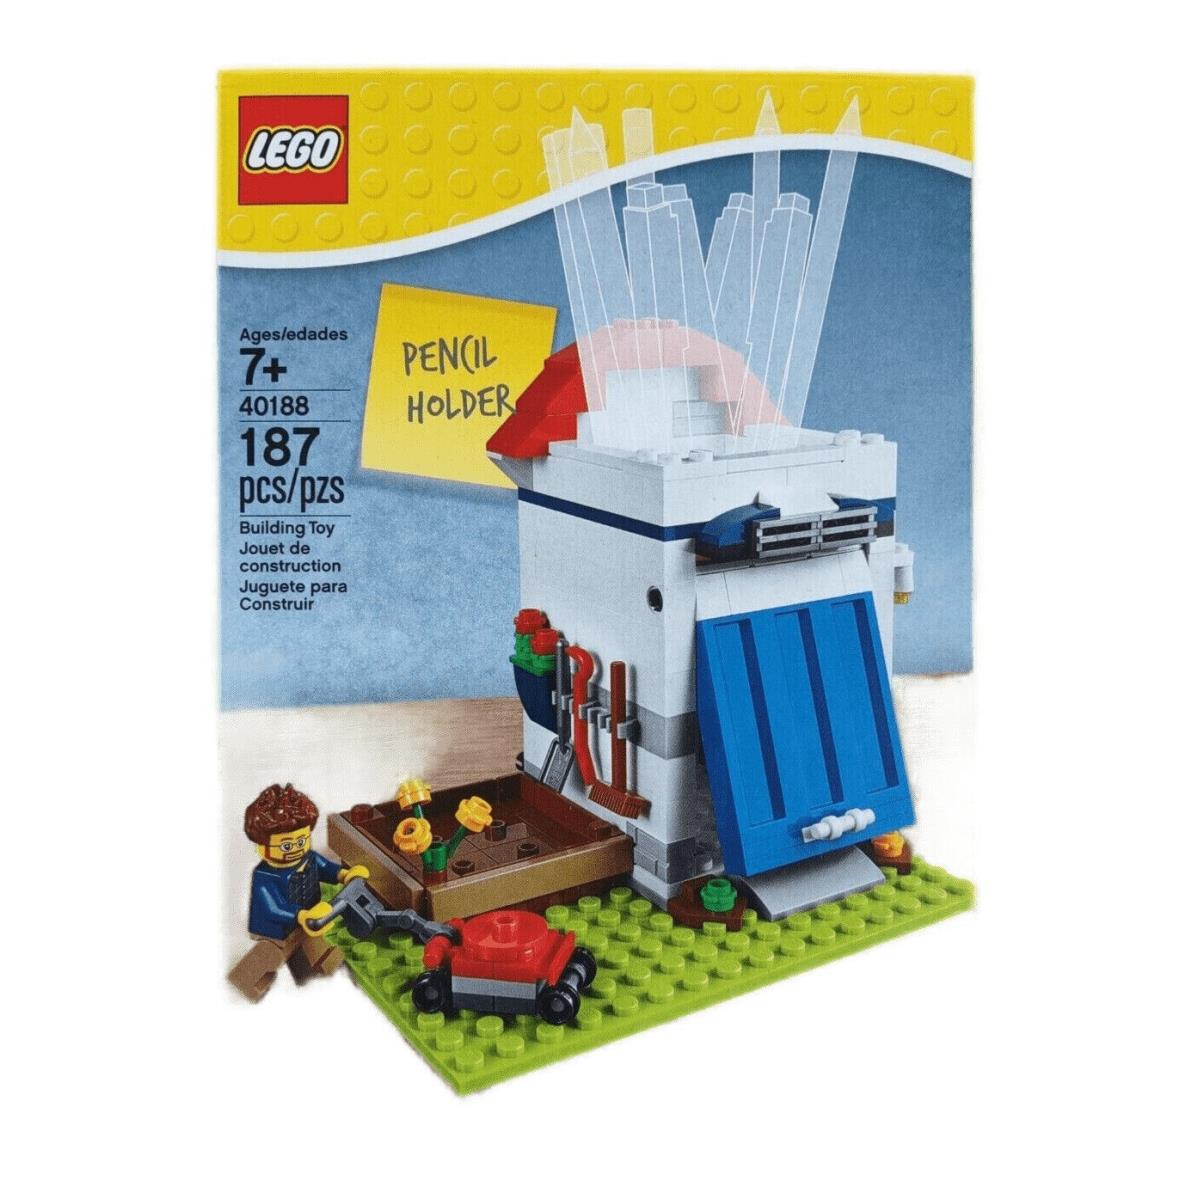 Lego 40188 Pencil Holder Garden Shed Retired